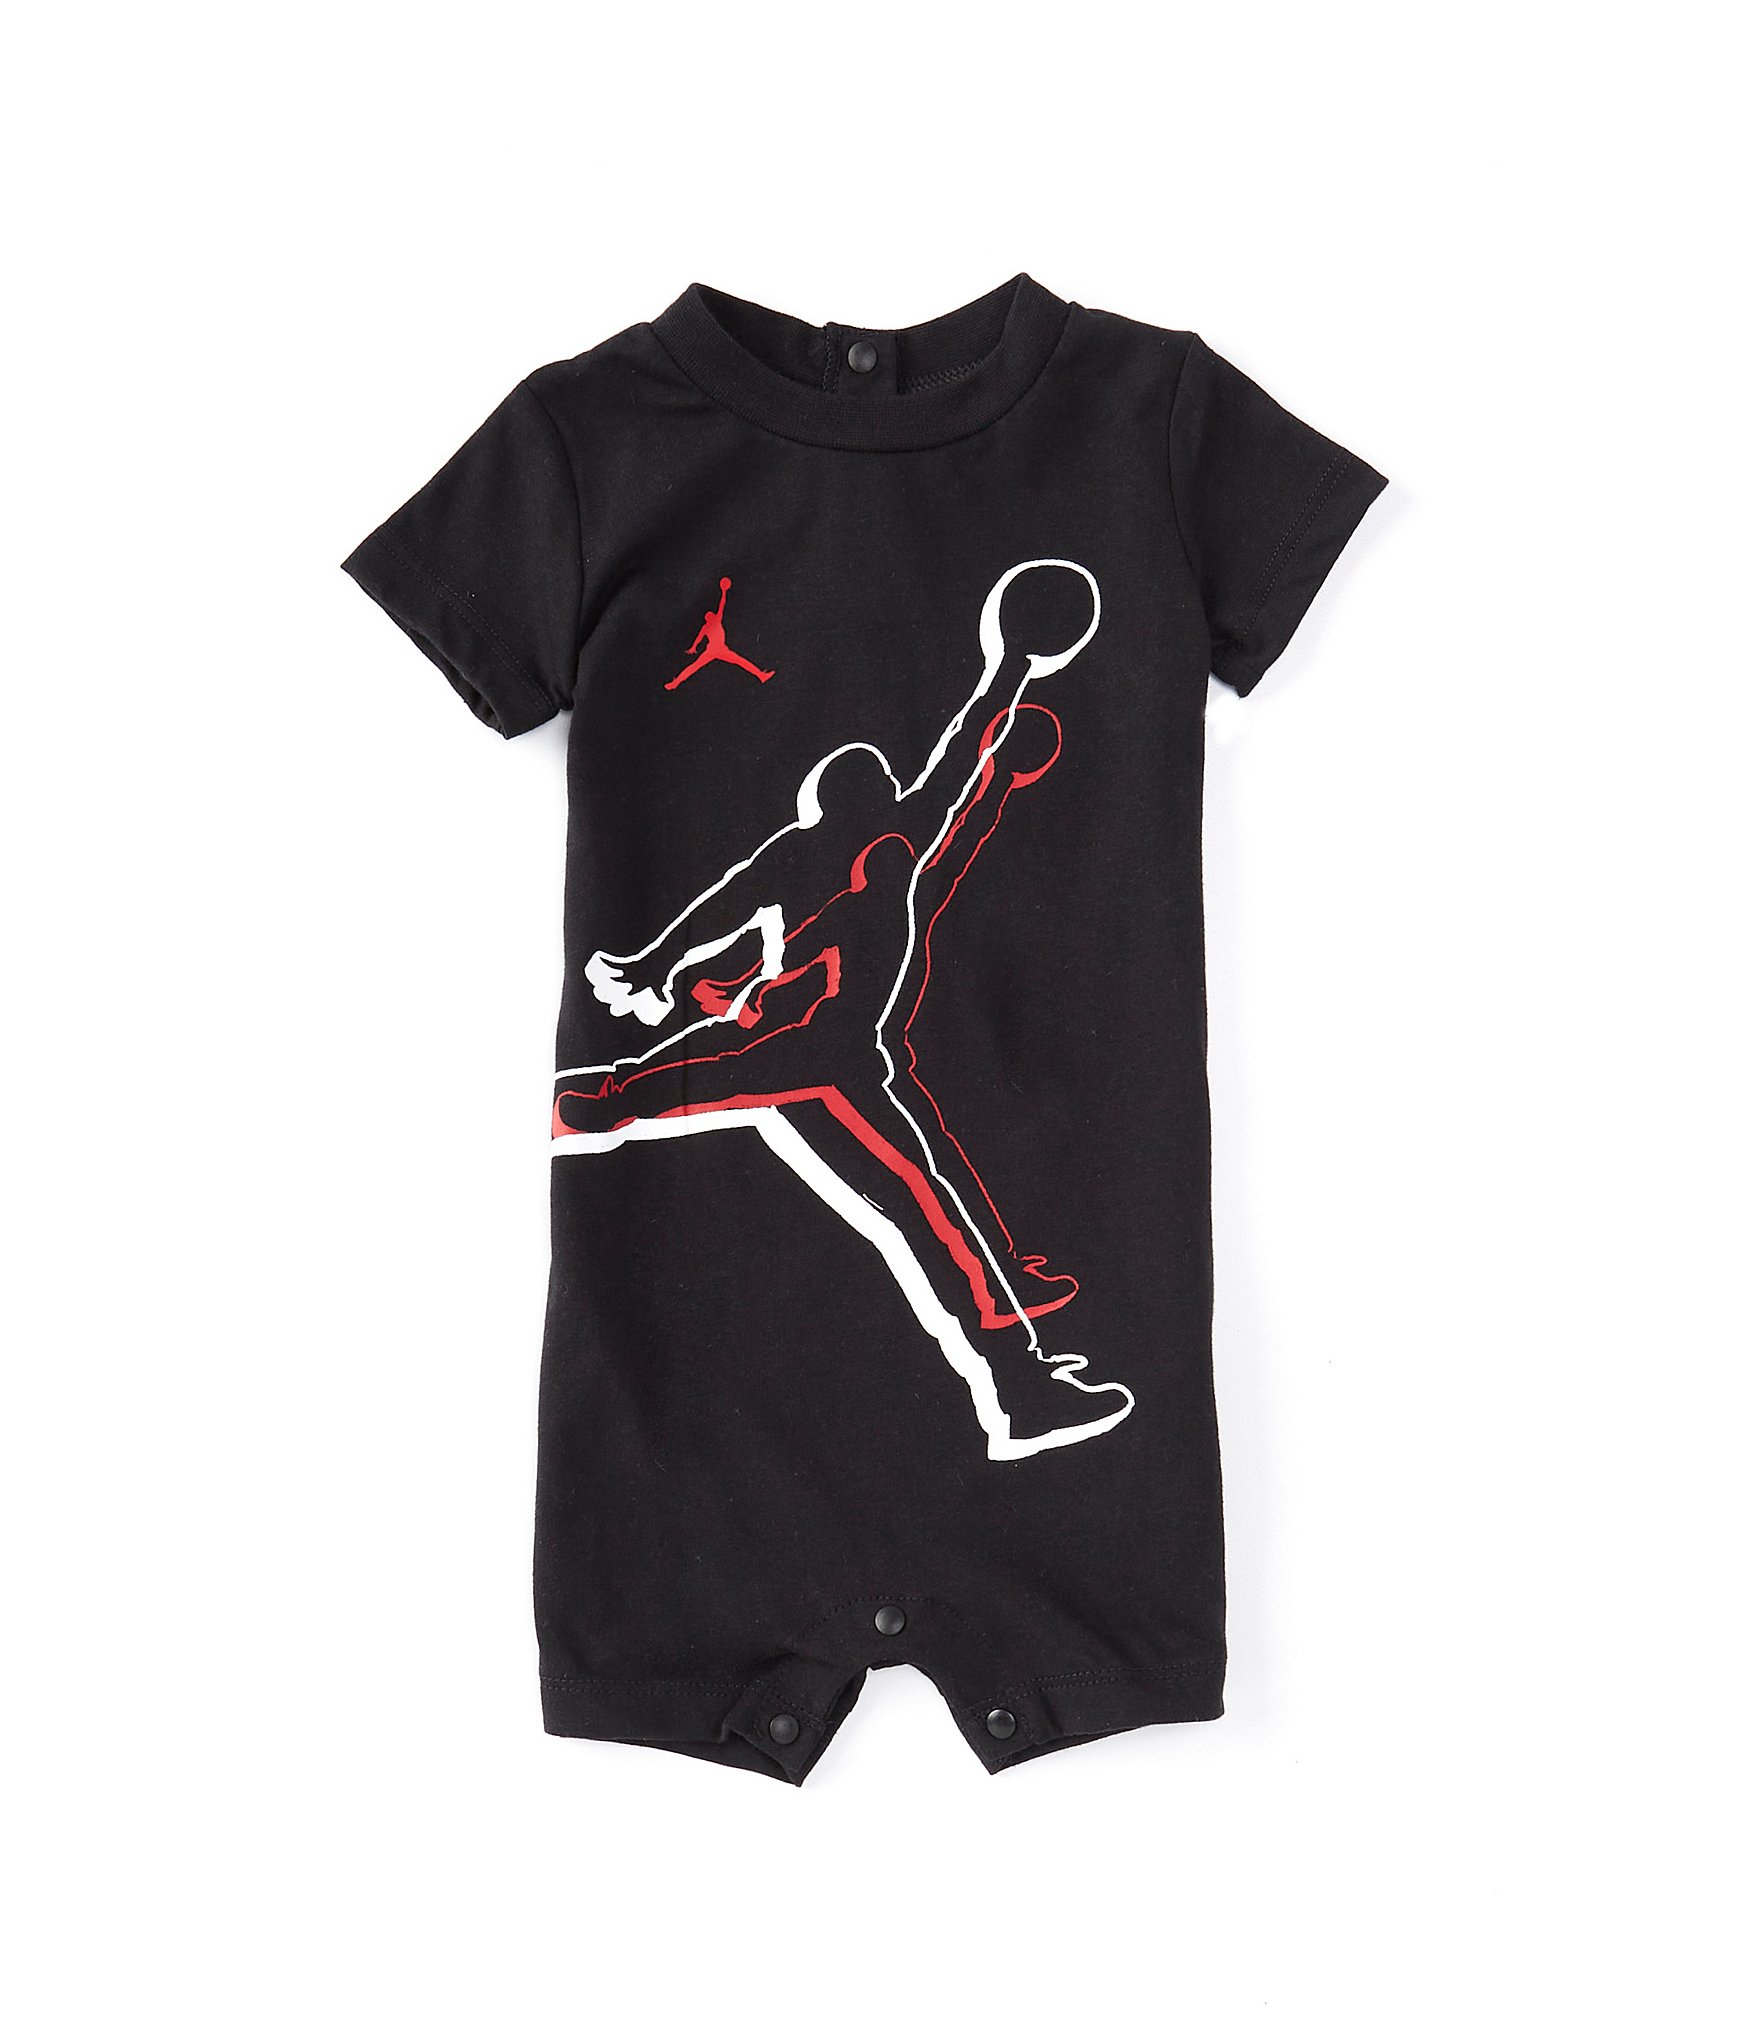 Jordan Baby Boys Newborn-9 Months Short Sleeve Air Jumpman Romper ...